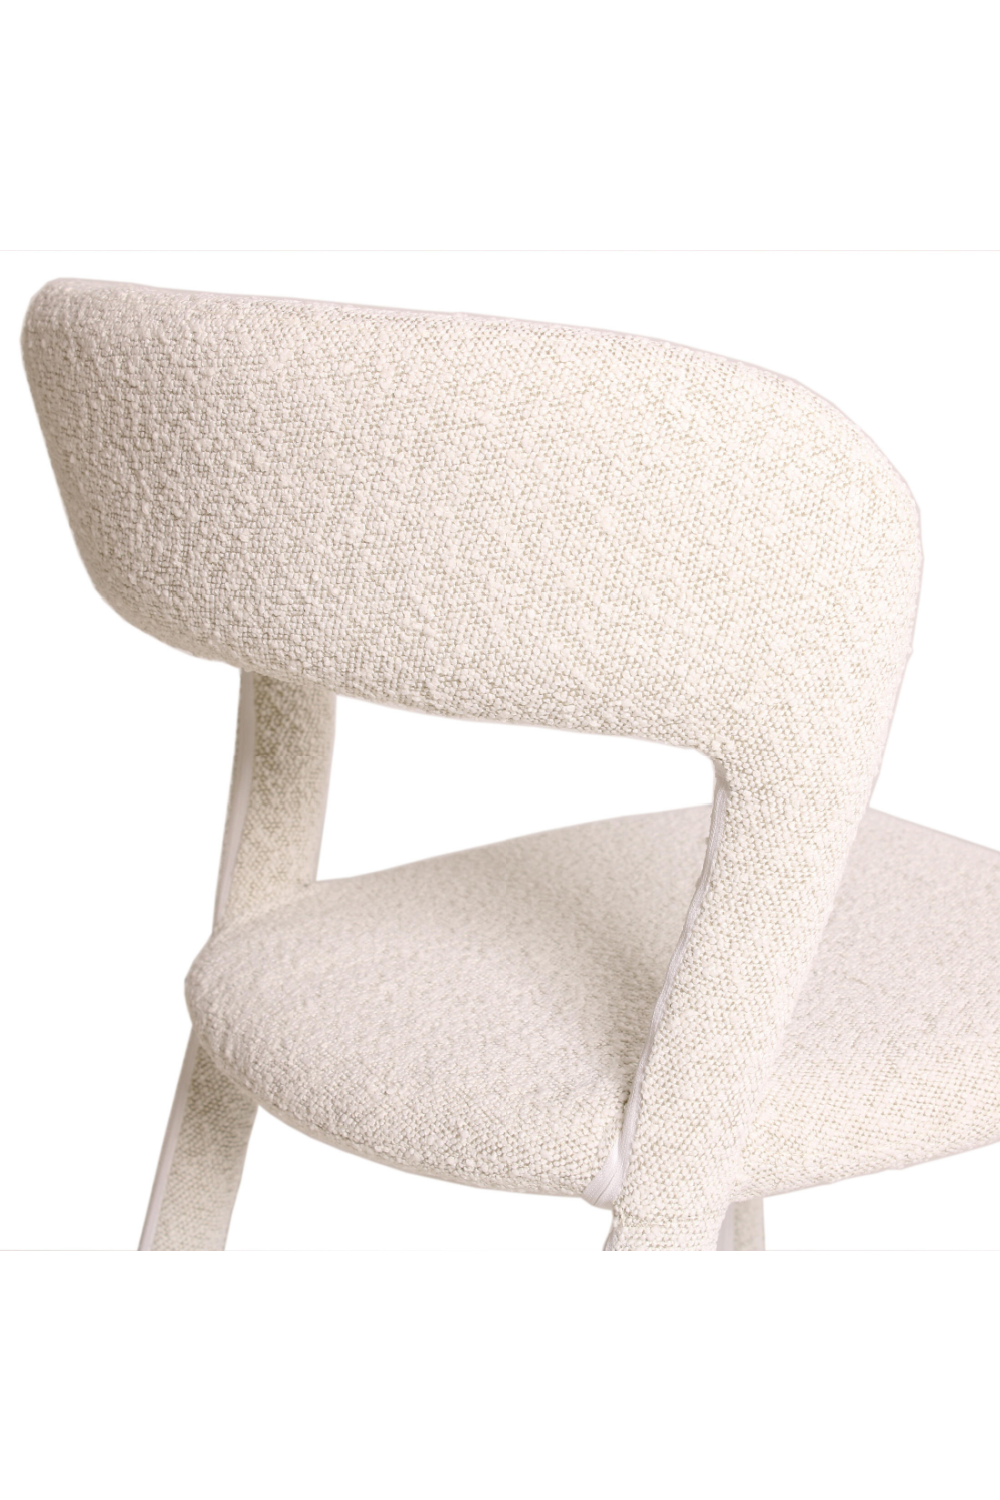 White Bouclé Dining Chair | Andrew Martin Mian | Oroa.com